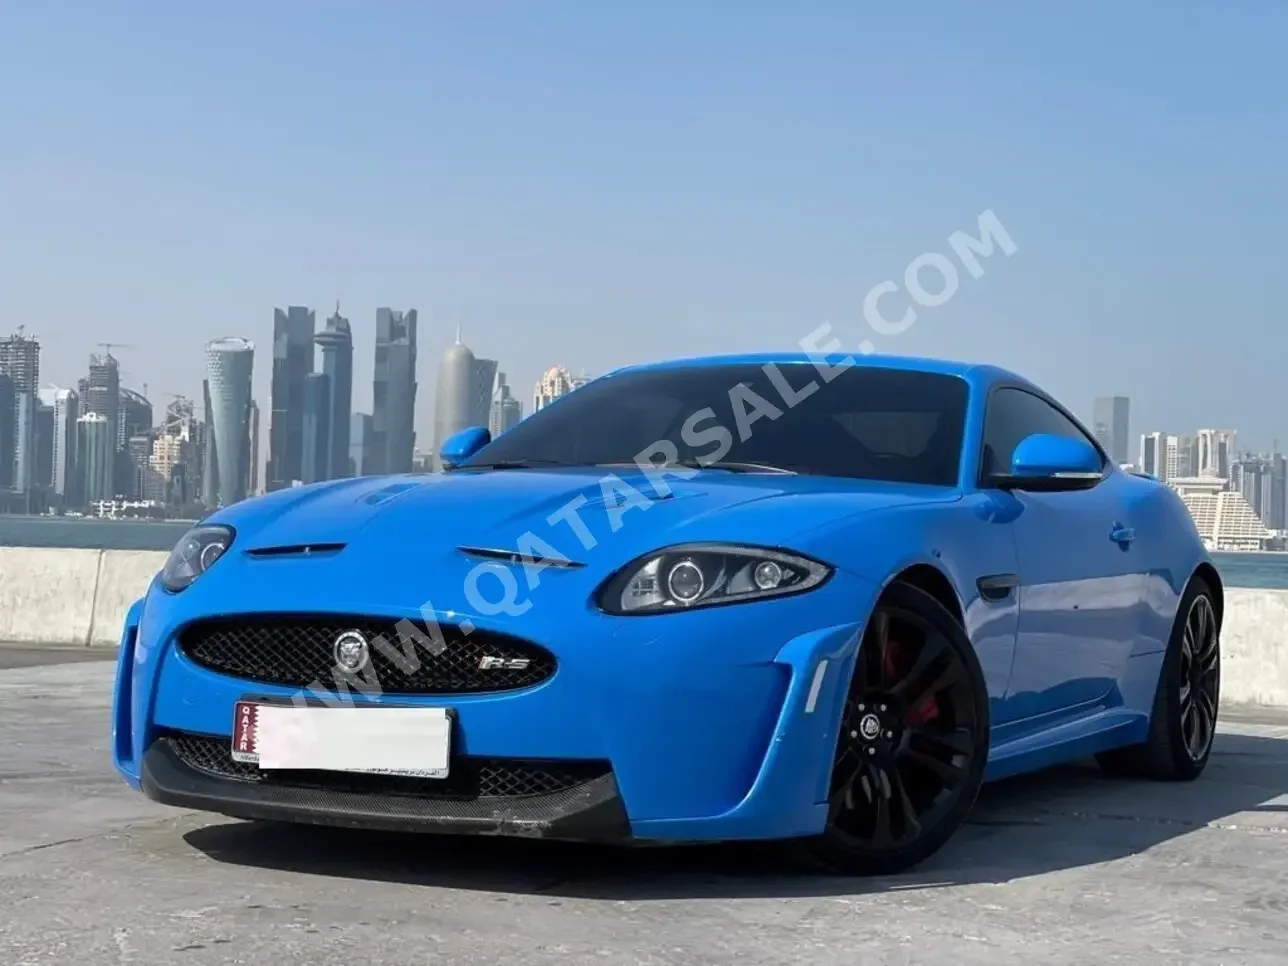 Jaguar  XKR  S  2012  Automatic  95,000 Km  8 Cylinder  Rear Wheel Drive (RWD)  Coupe / Sport  Blue